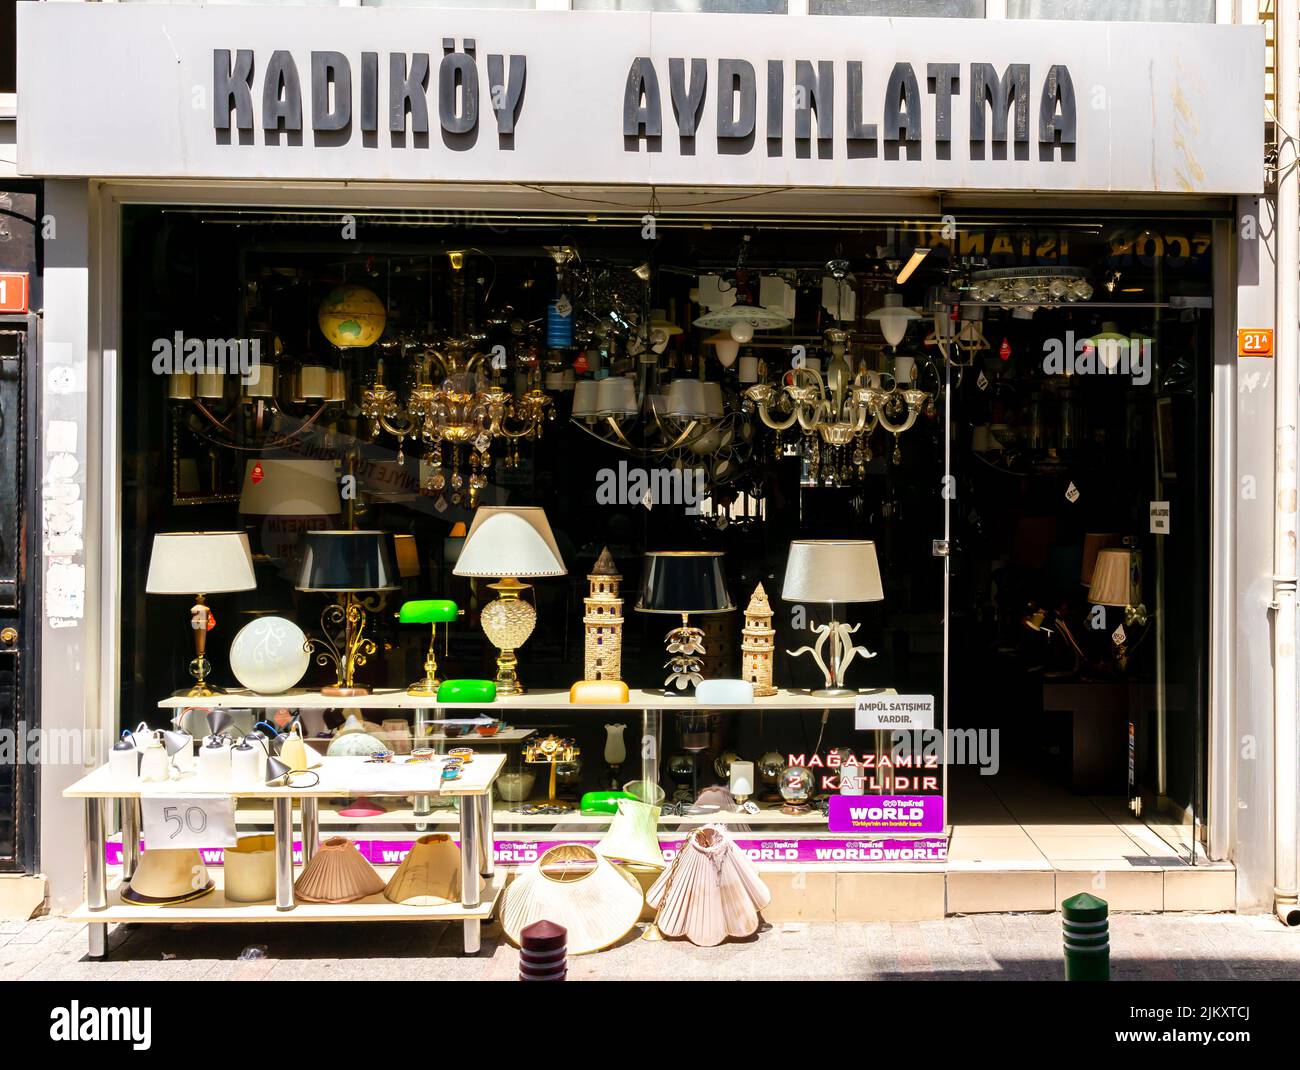 Kadikoy Aydinlatma - tienda de iluminación - Kadikoy, Estambul, Turquía Foto de stock